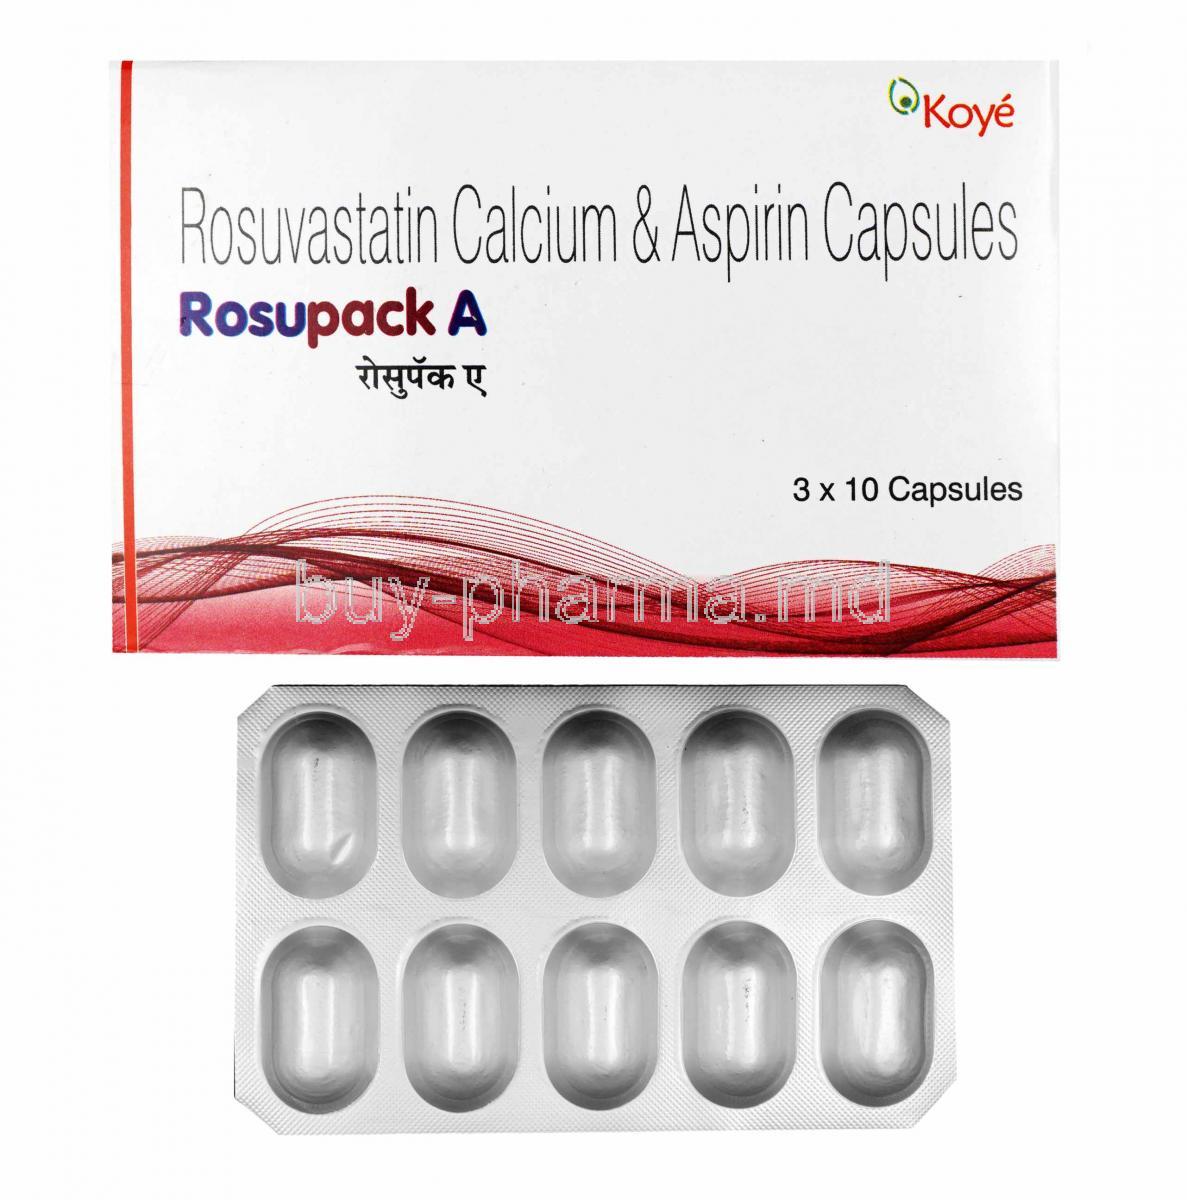 Rosupack A, Rosuvastatin and  Aspirin box and capsules